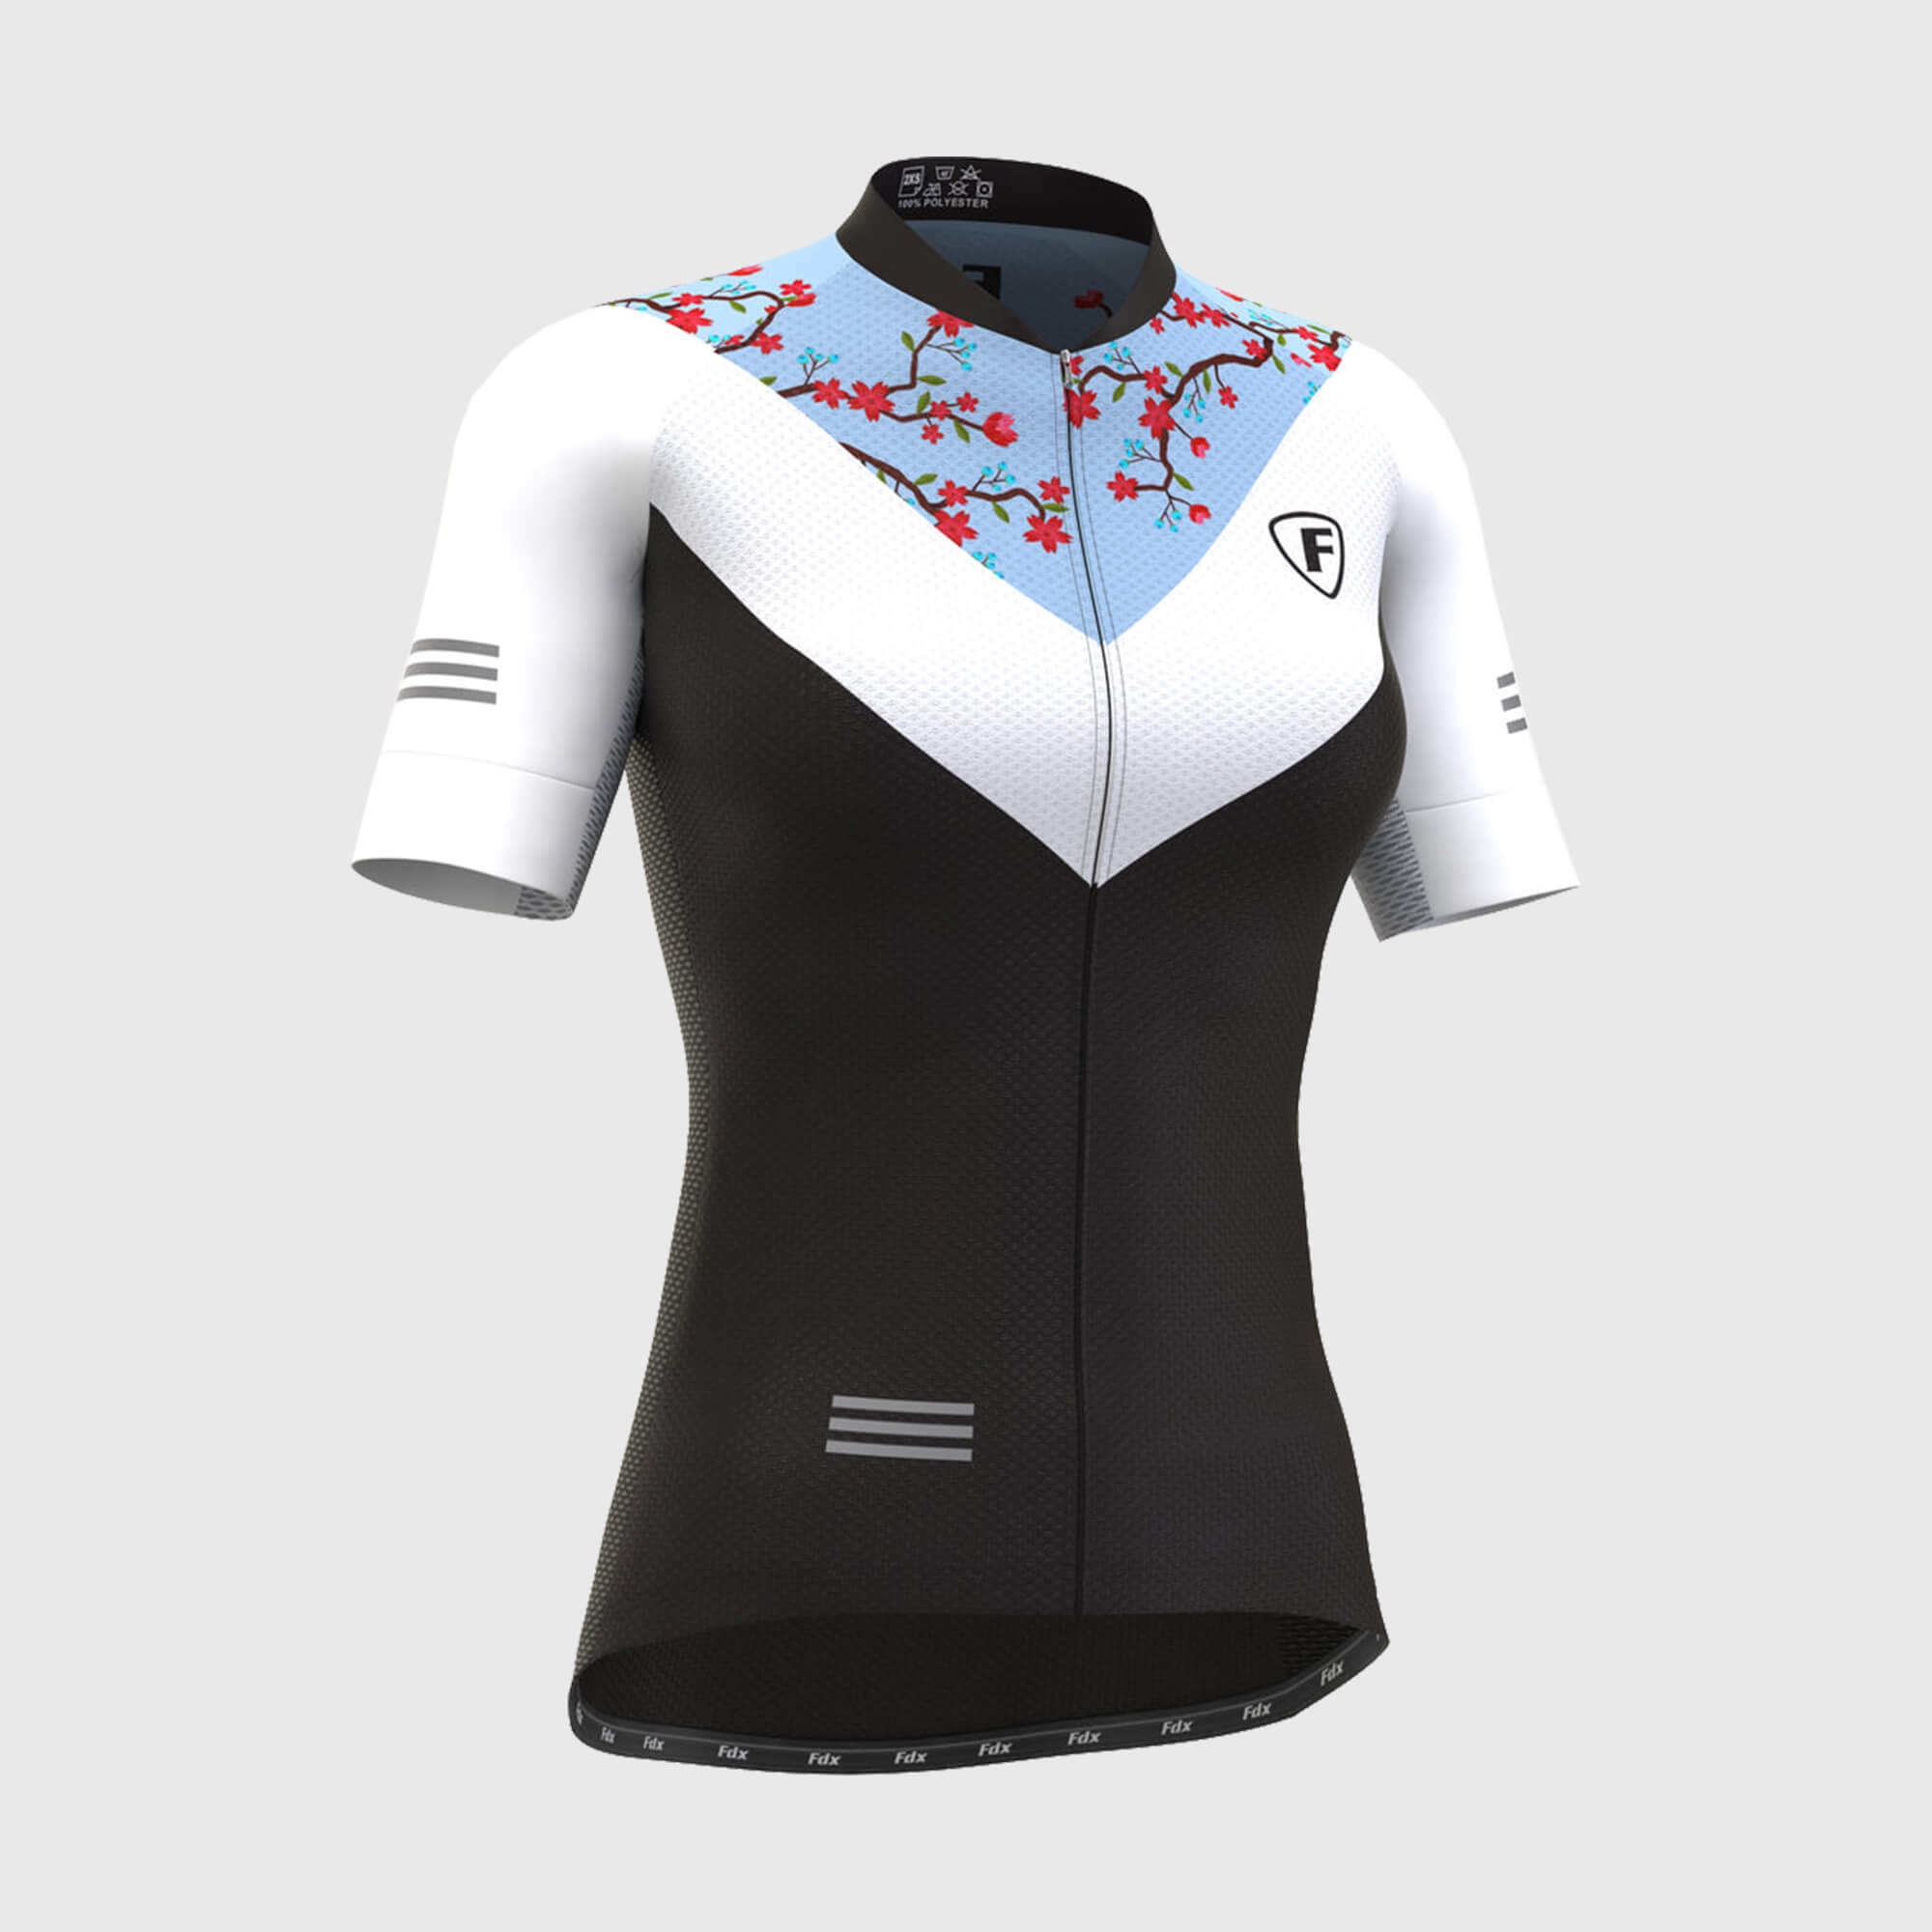 FDX Women's Black, White & Blue Short Sleeve Best Cycling Jersey & Breathable Mesh Bib Short Reflective Details 3D Cushion Pad Lightweight 